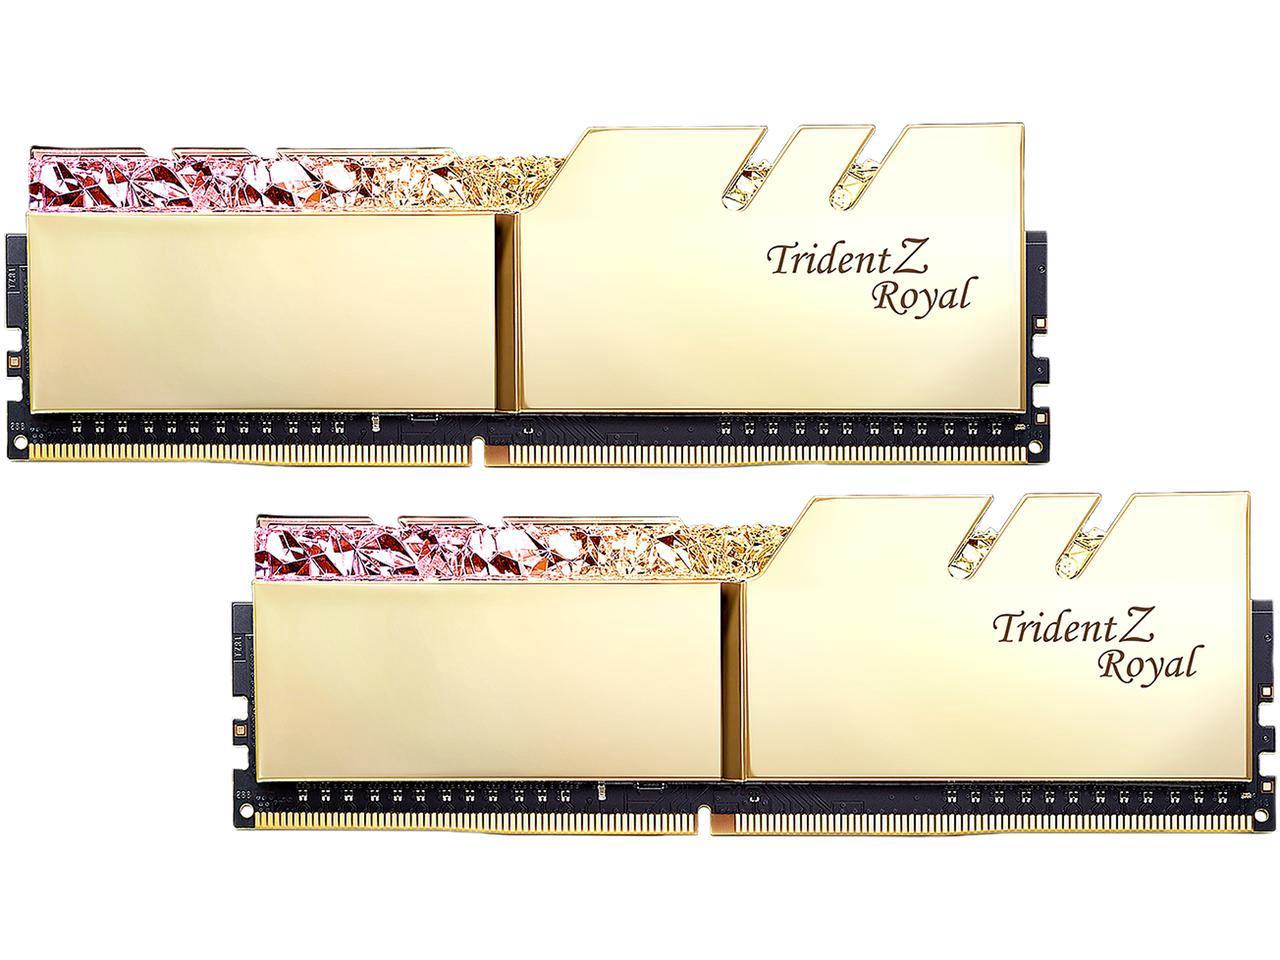 G Skill Trident Z Royal Series DDR4 16/32 GB (2 x 8/16 GB) 3200MHz -G